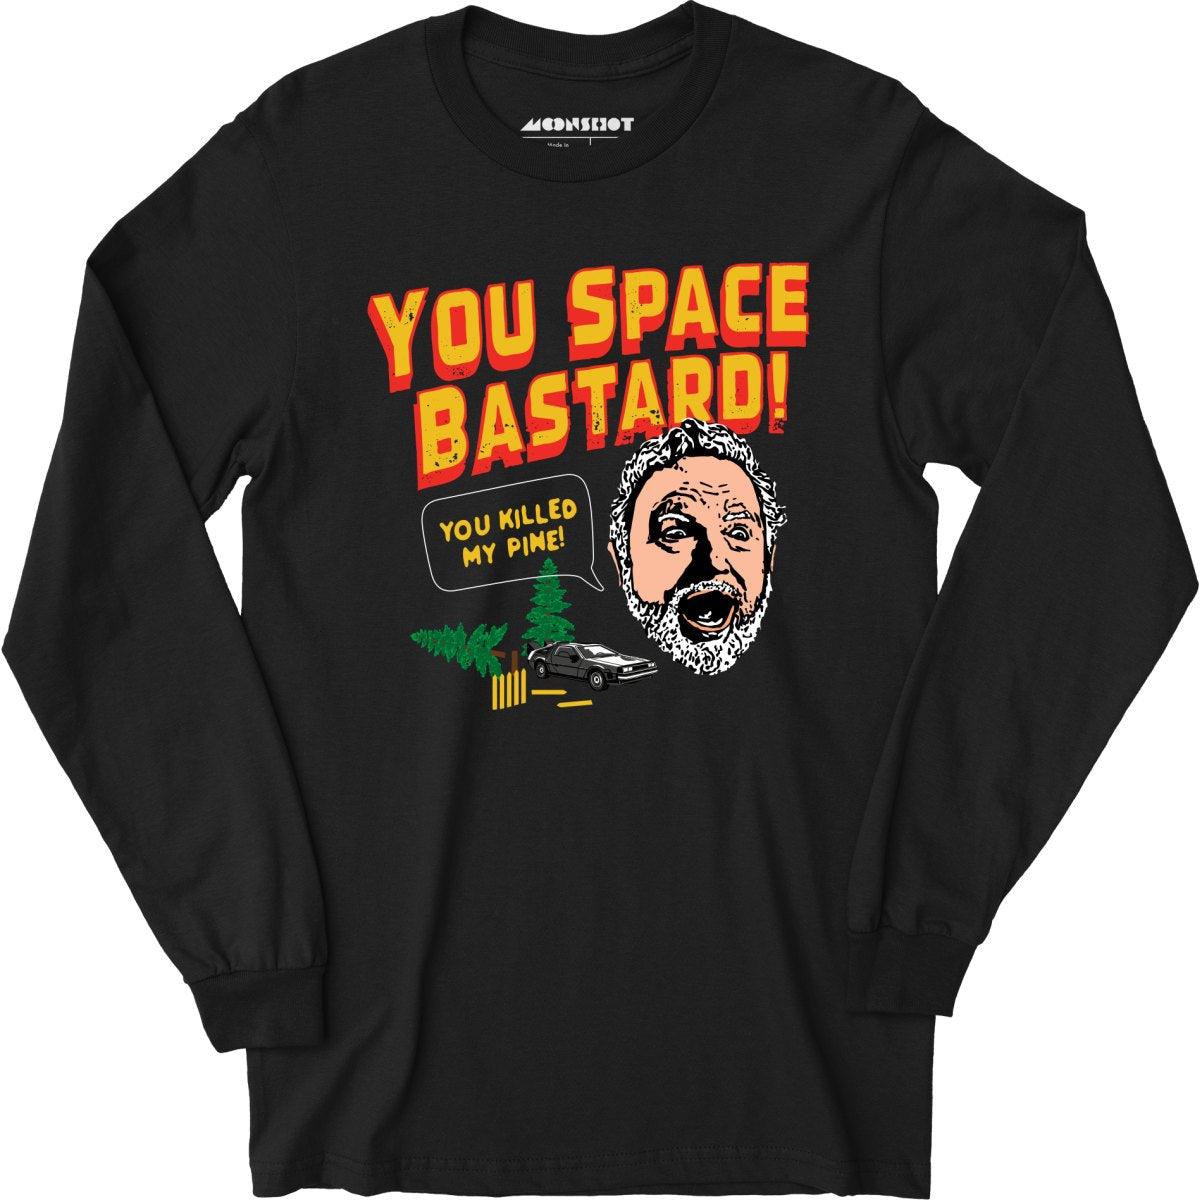 You Space Bastard! You Killed My Pine! - Long Sleeve T-Shirt